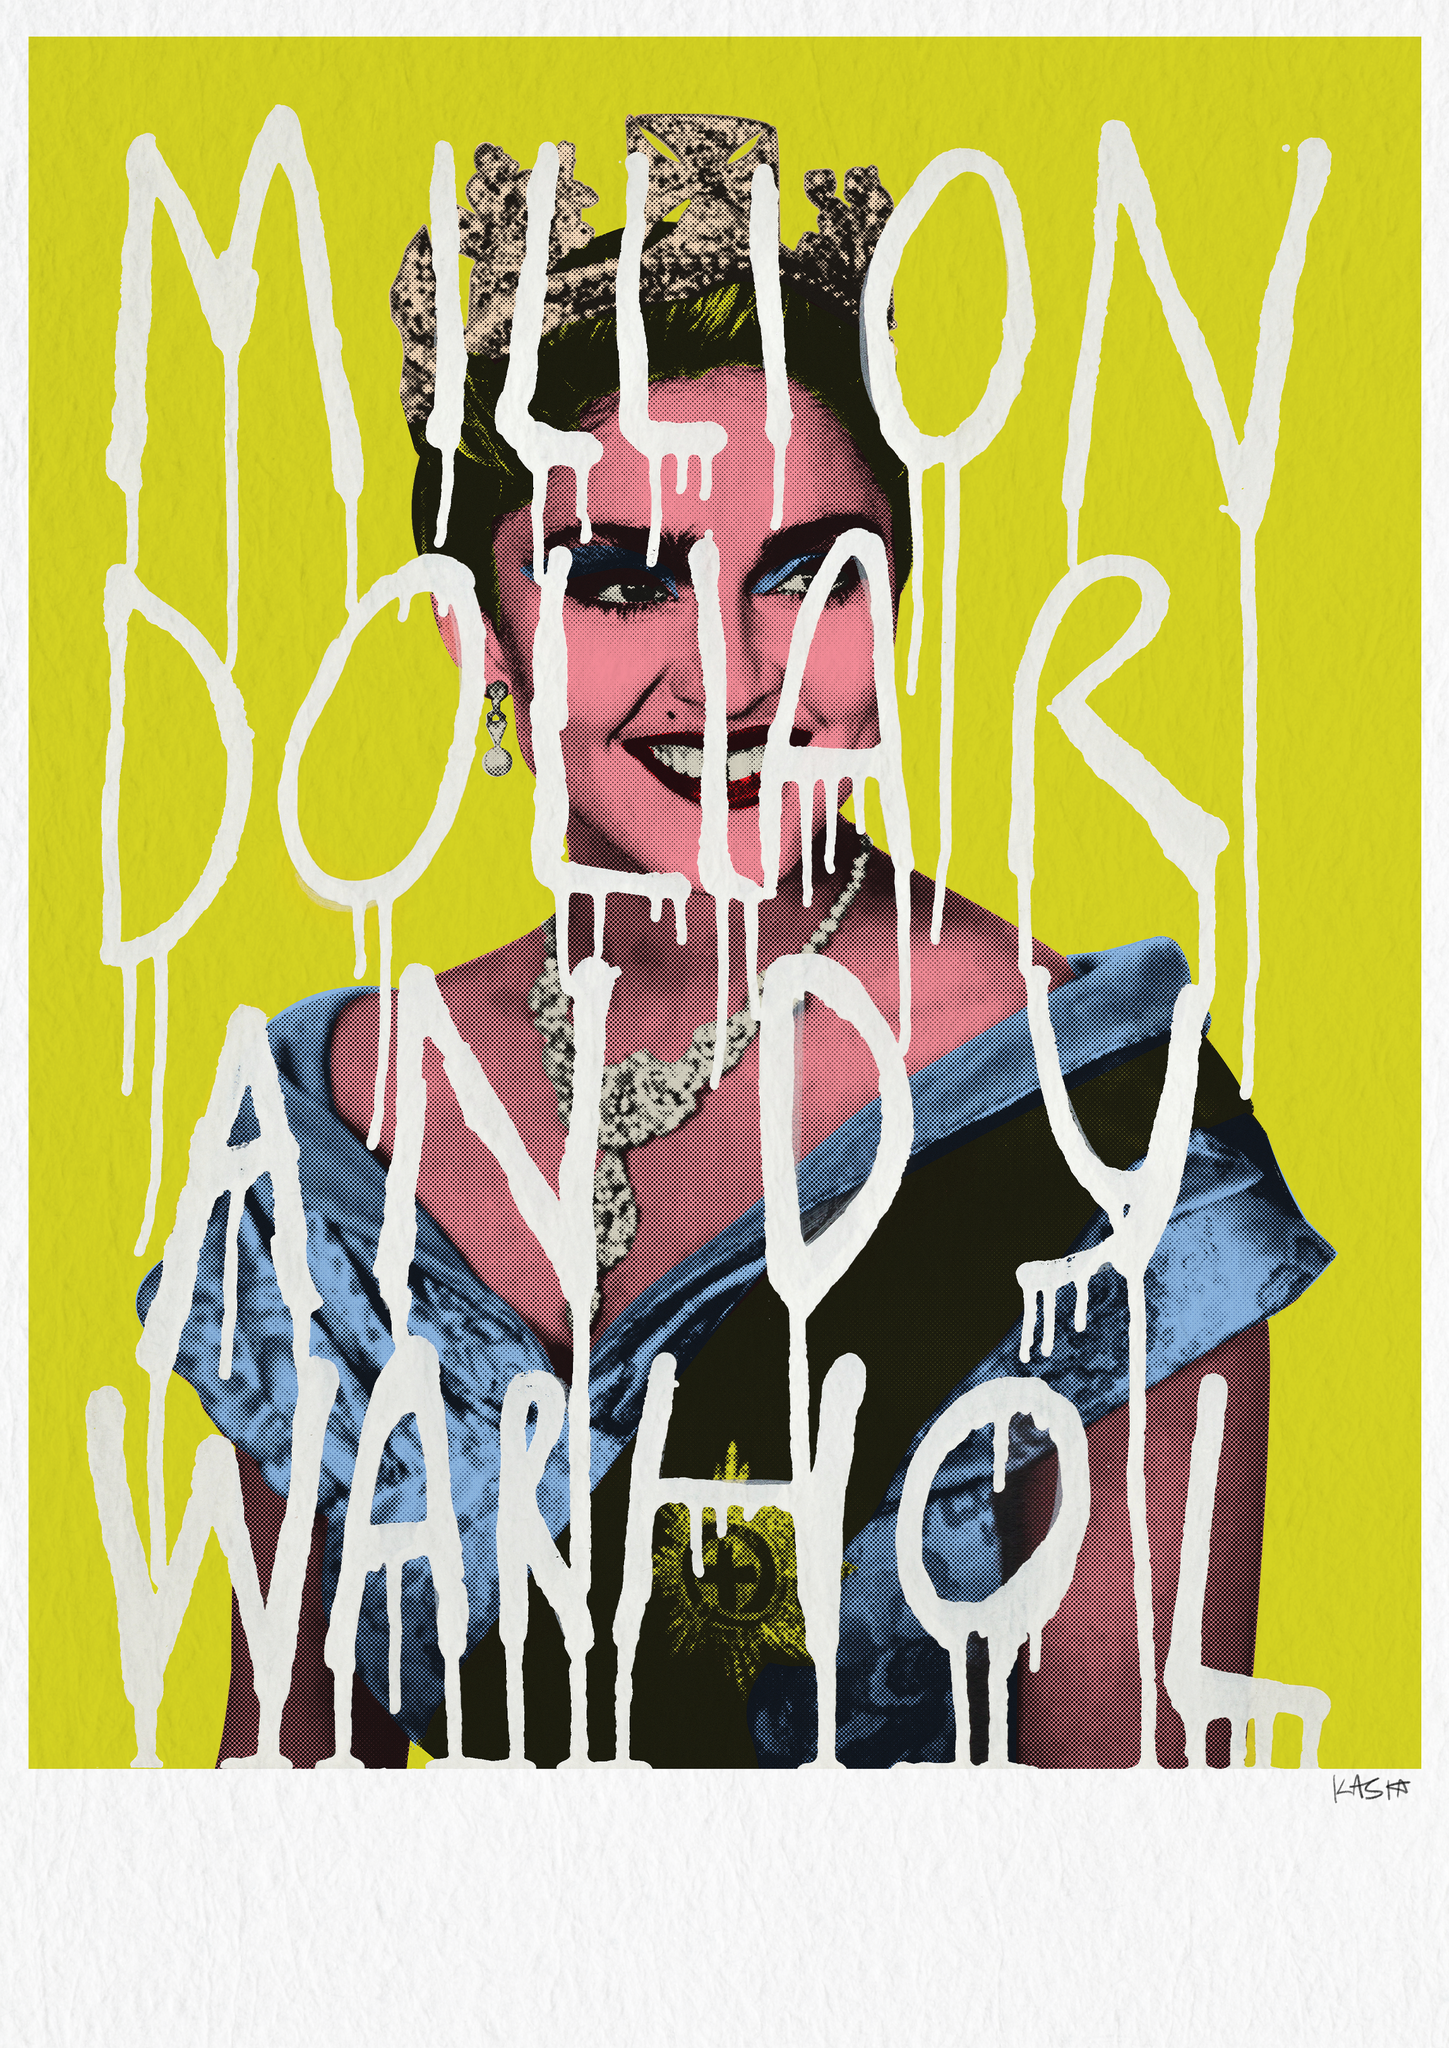 Million Dollar Andy Warhol (Madonna is Queen)